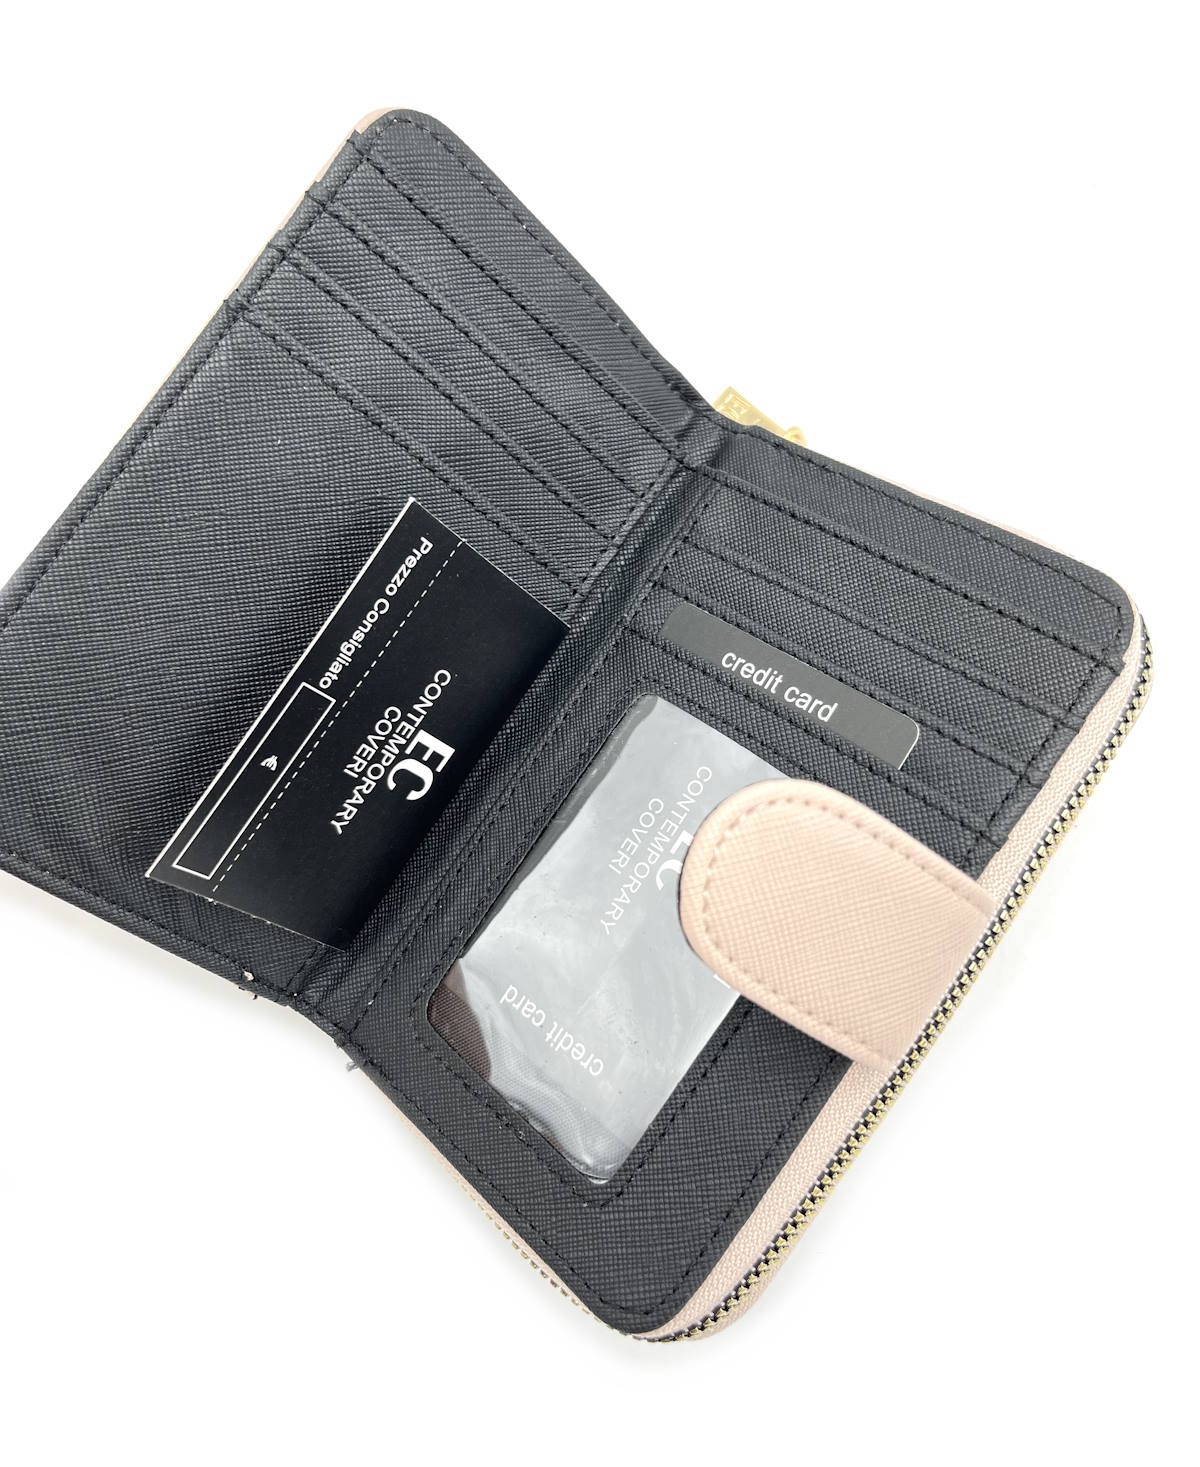 Eco leather wallet for women, EC Coveri, art. EC23503-004